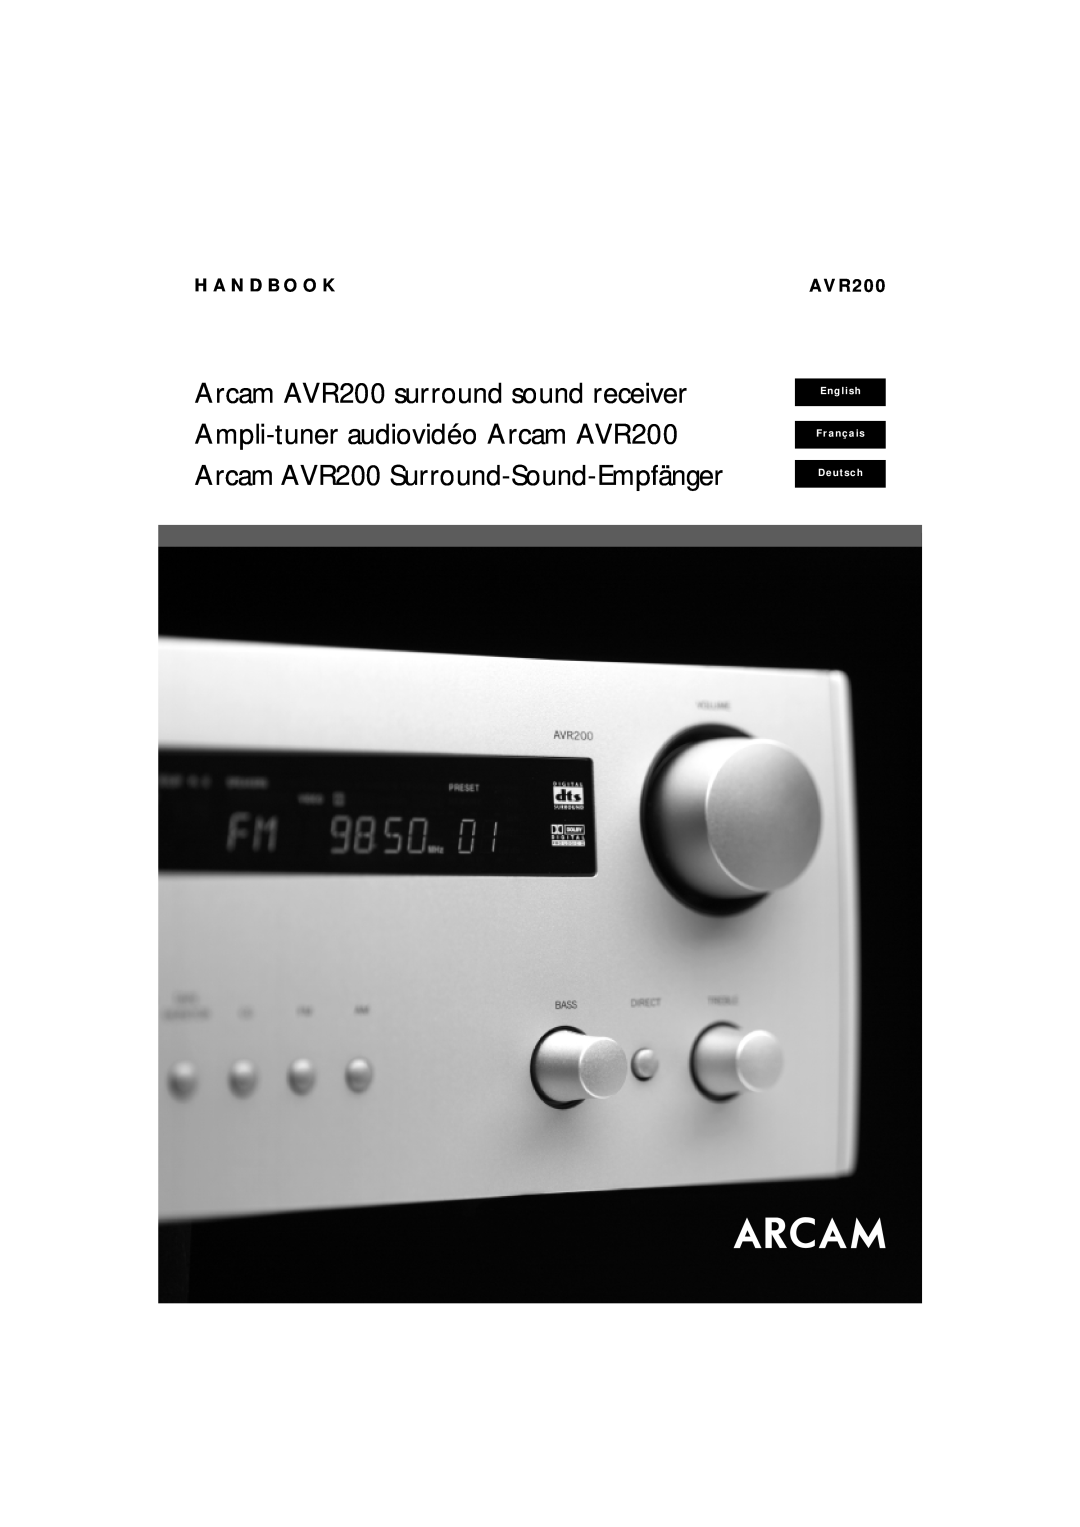 Arcam manual Arcam AVR200 surround sound receiver, Ampli-tuneraudiovidéo Arcam AVR200, H A N D B O O K, Av R 